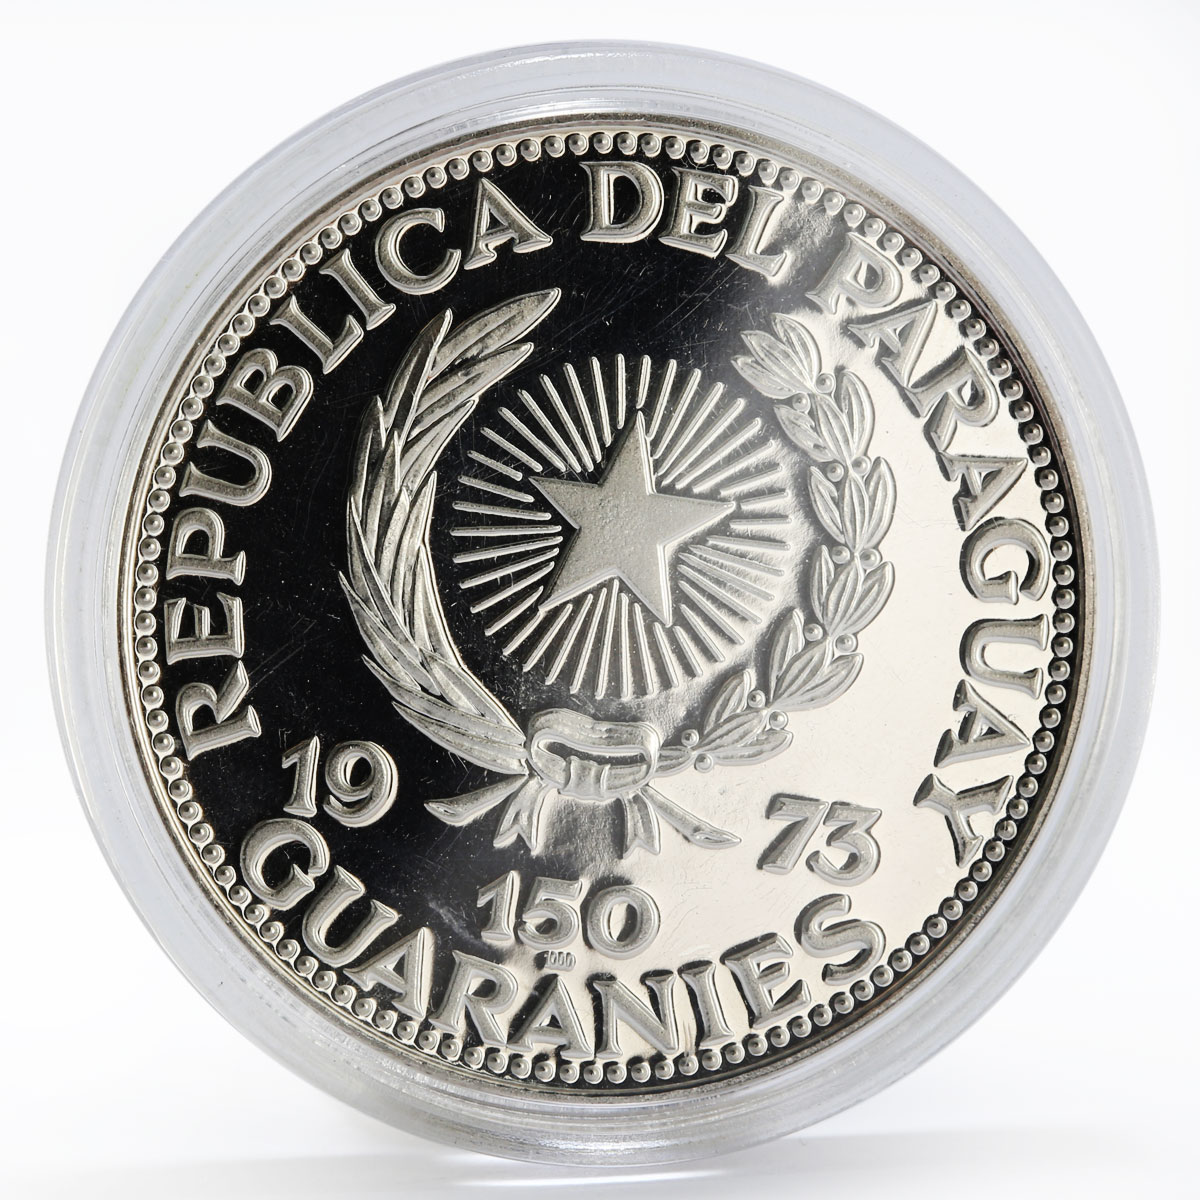 Paraguay 150 guaranies Veracruz Ceramica Vase silver coin 1973